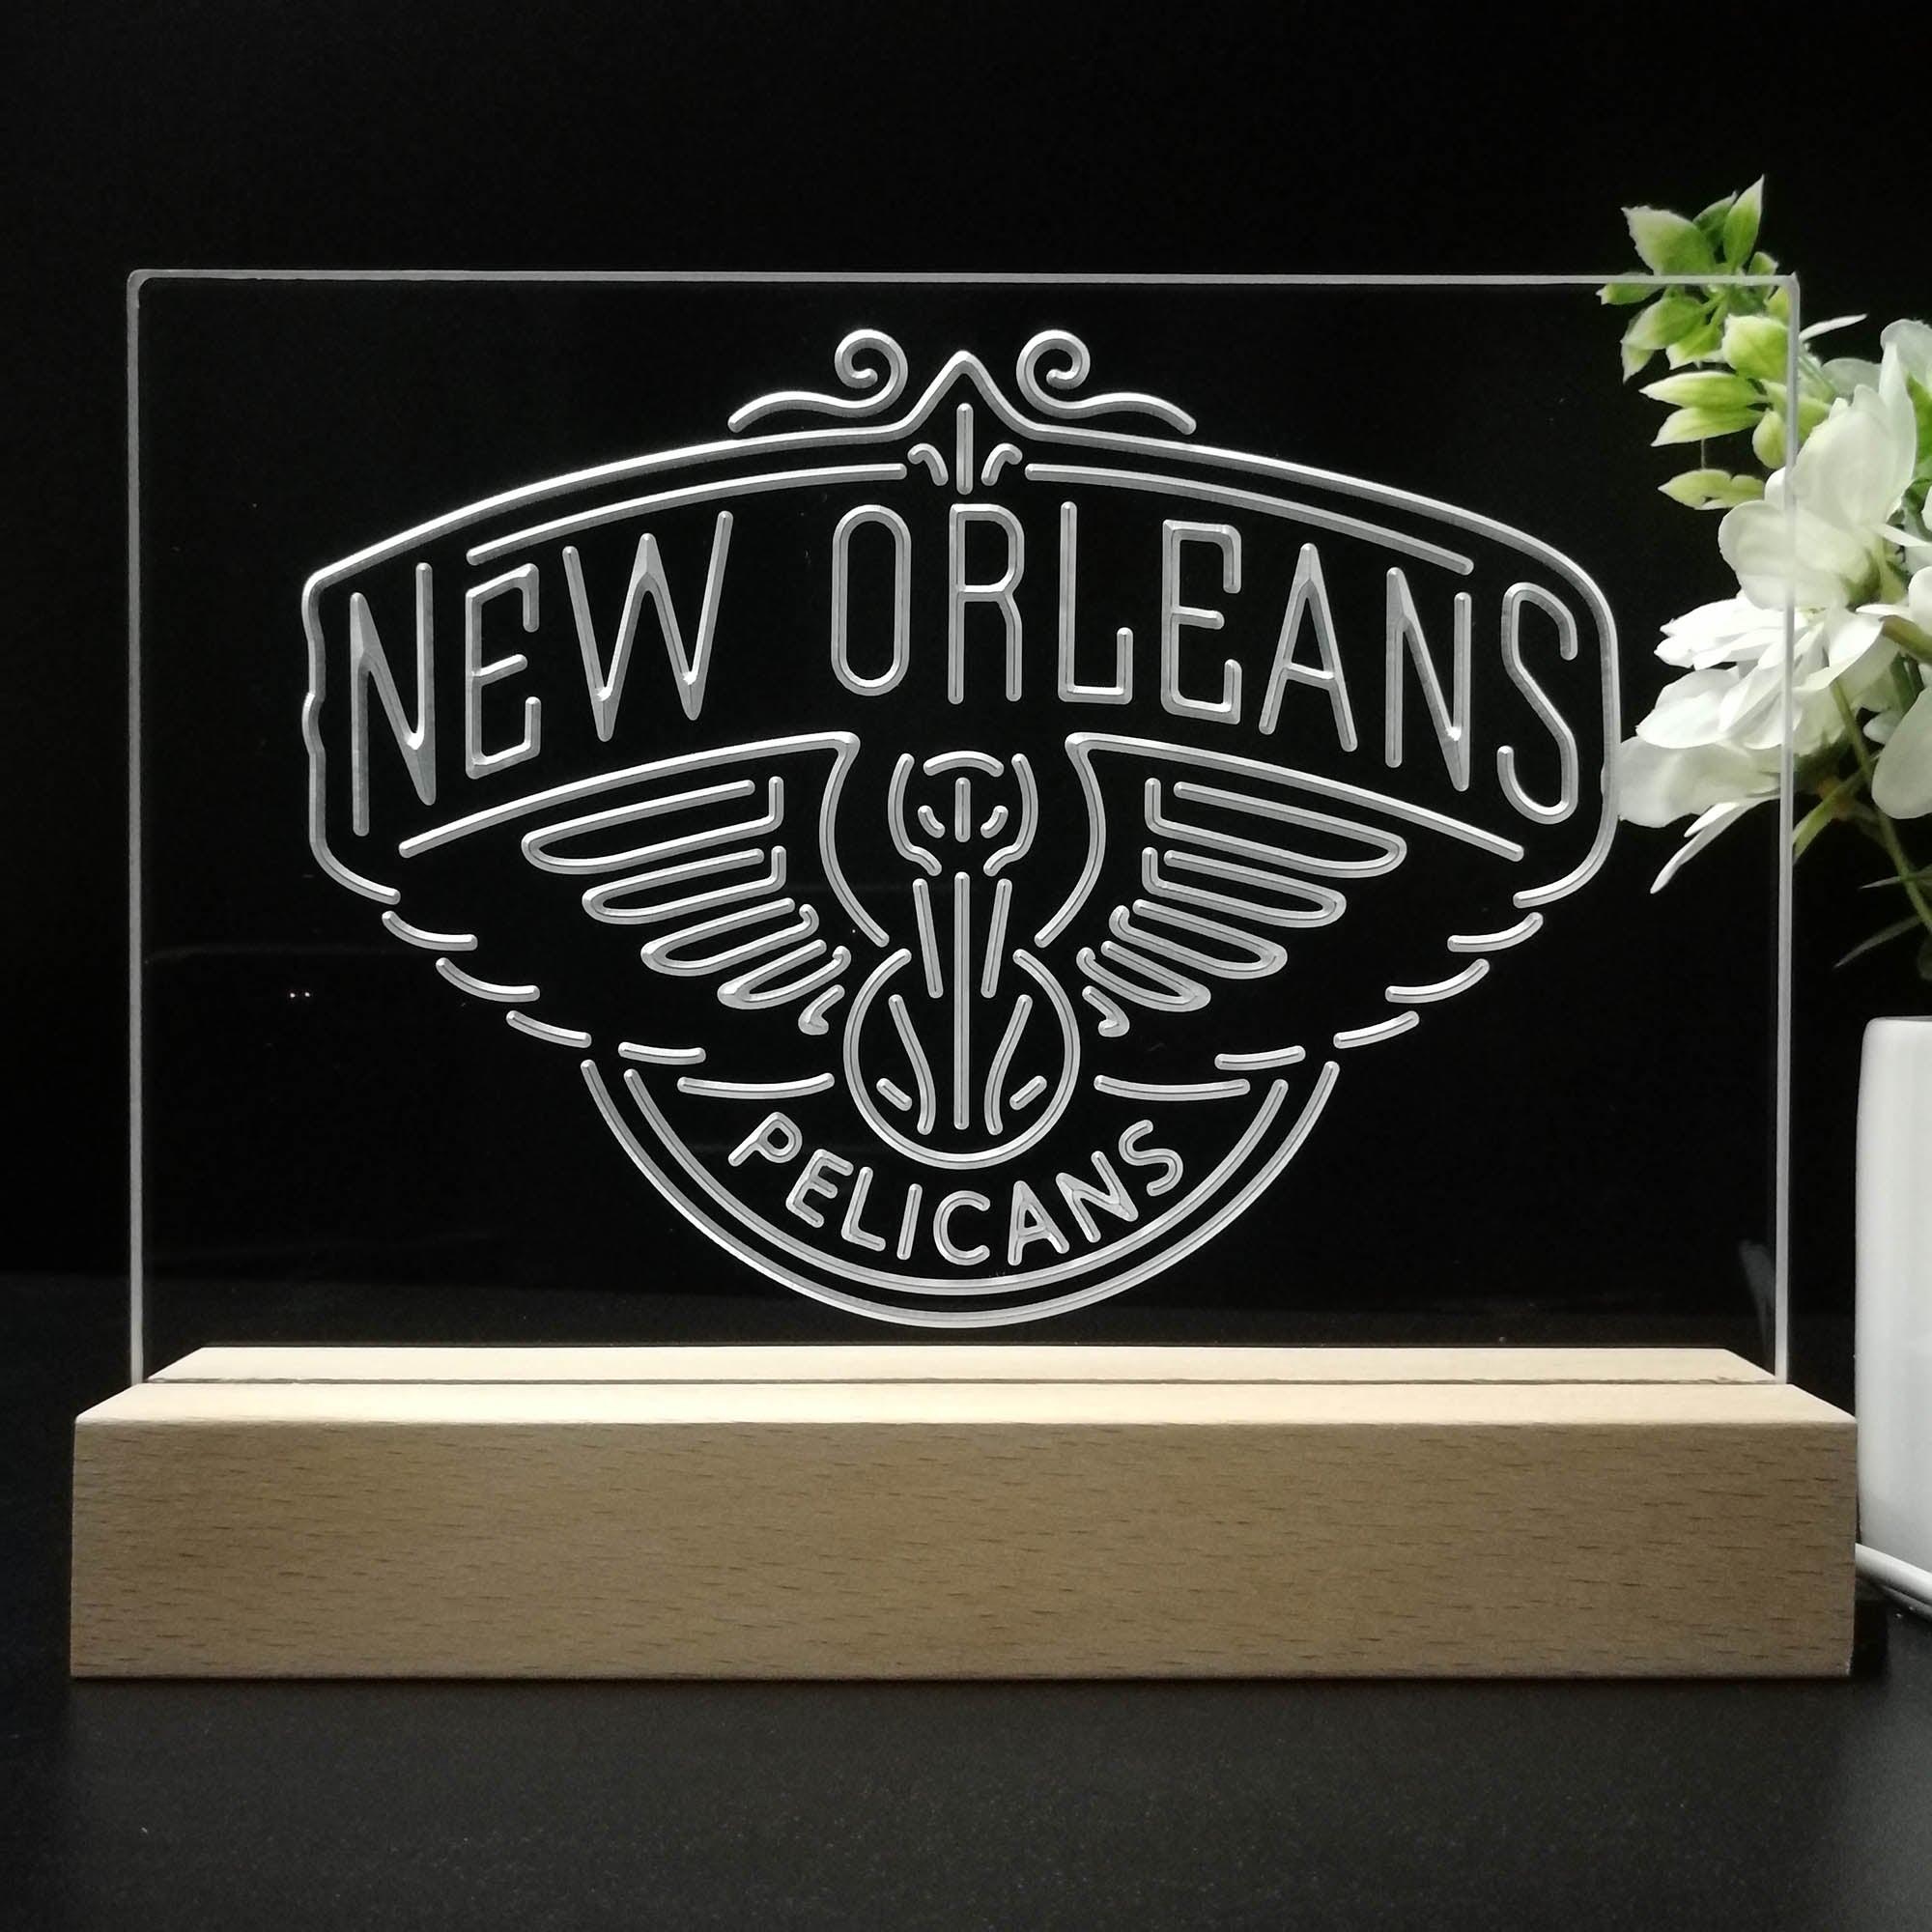 New Orleans Pelicans 3D LED Illusion Sport Team Night Light